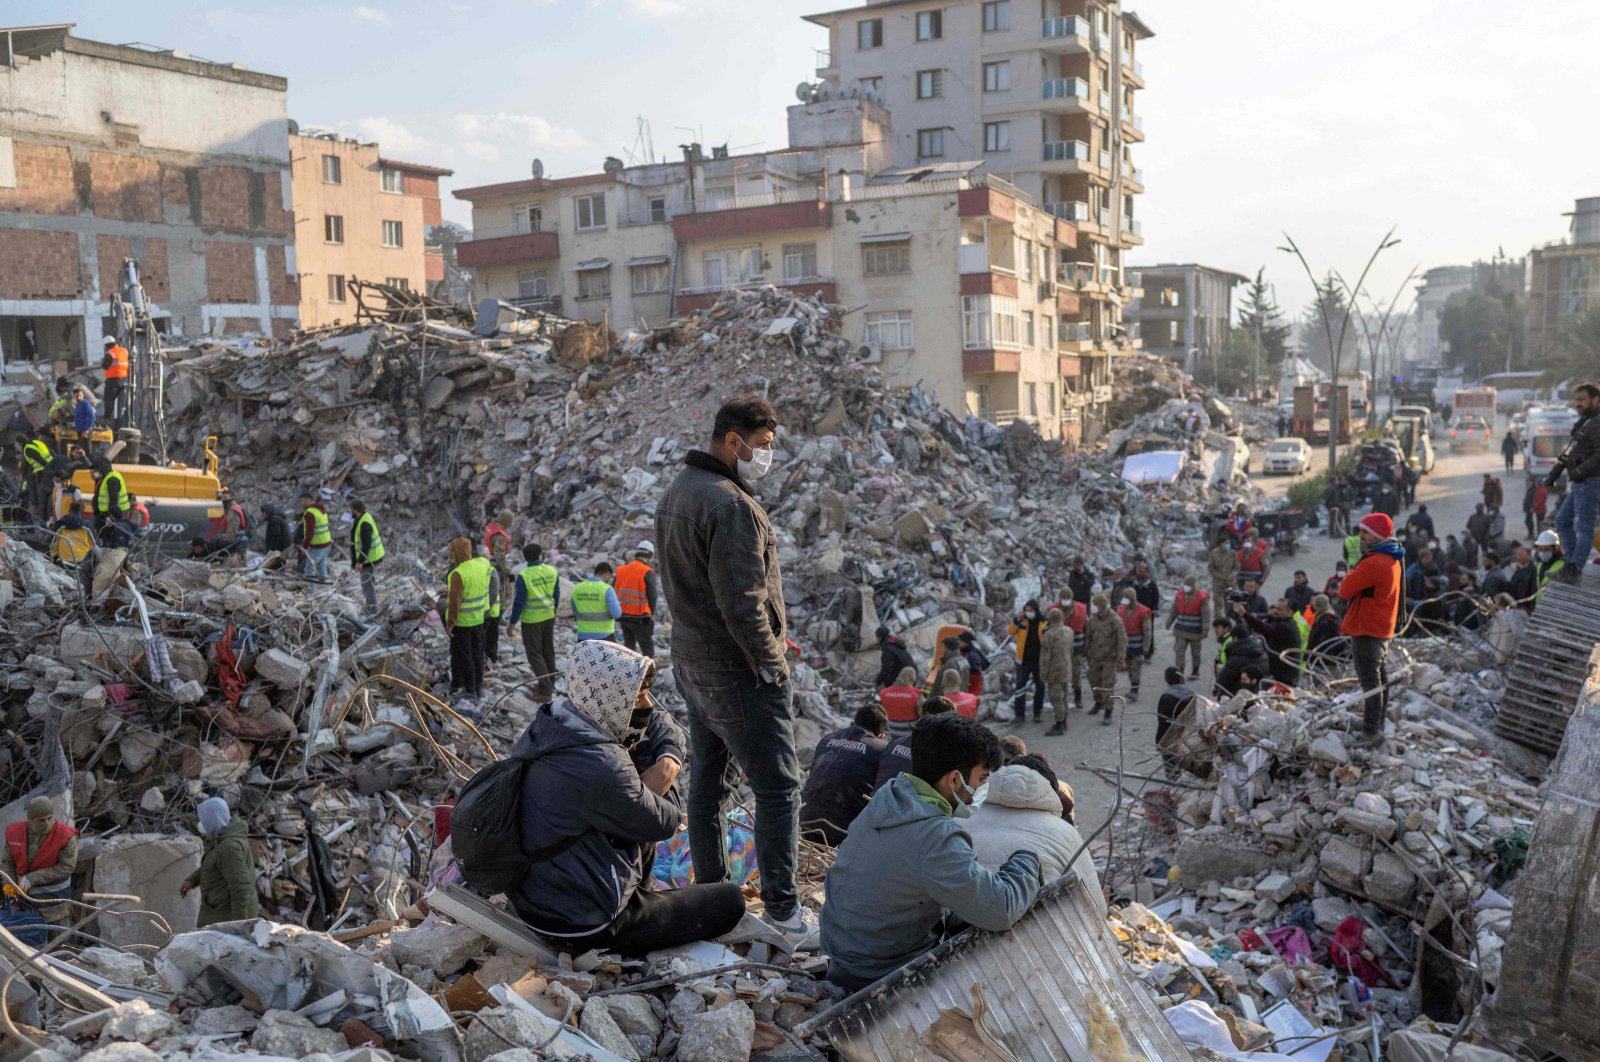 Korban tewas dalam gempa bumi dahsyat di Türkiye melampaui 31.000